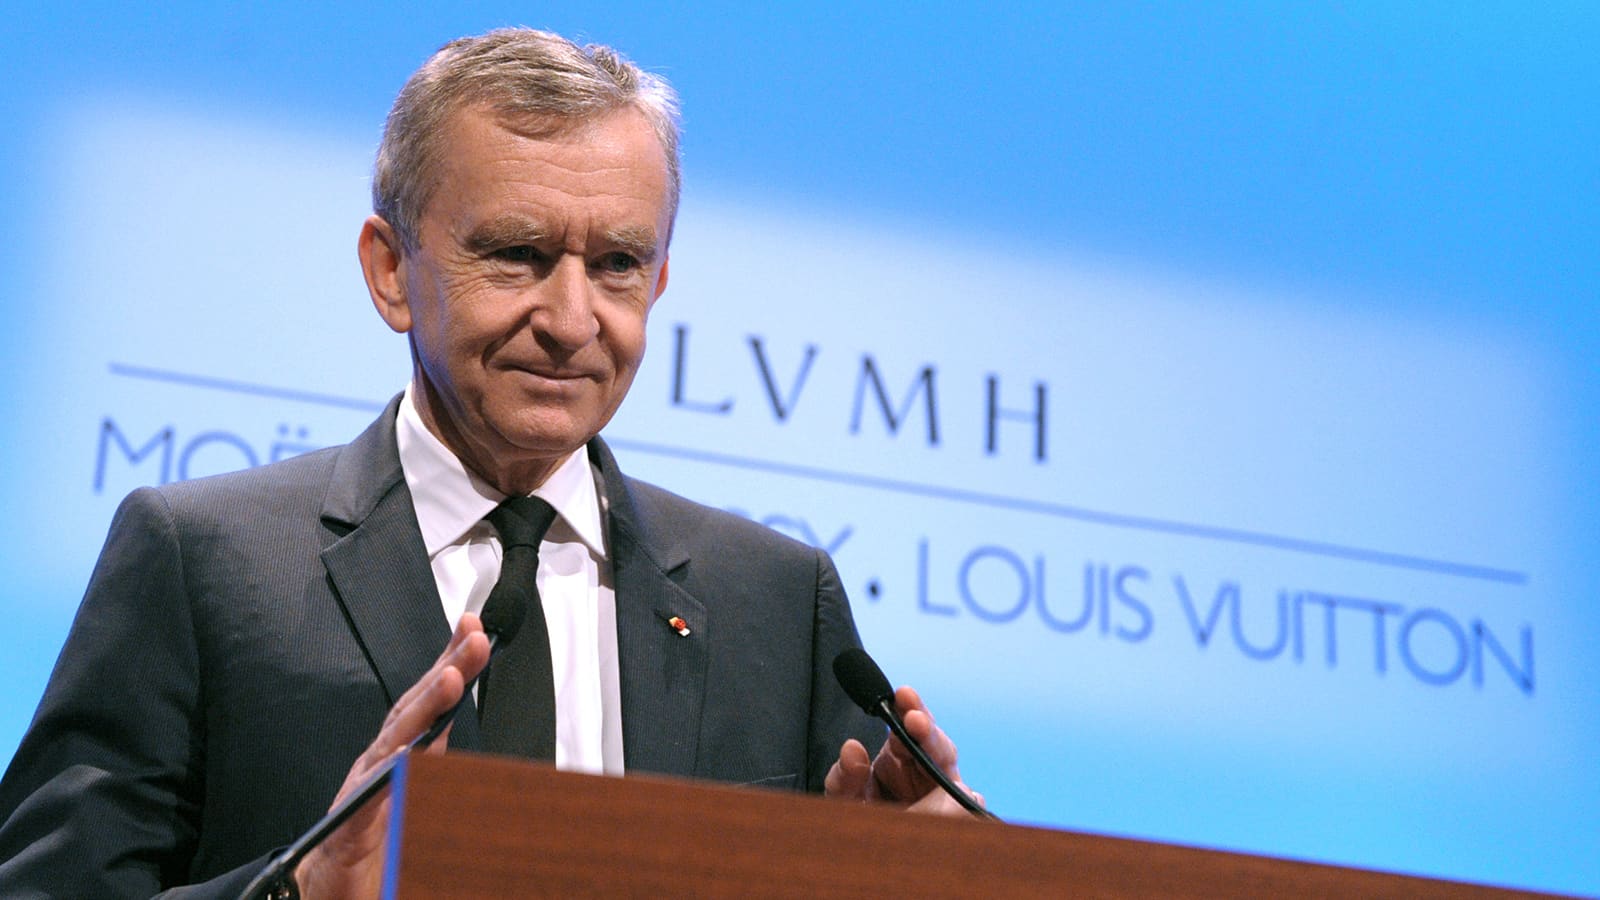 Louis Vuitton Owner, Bernard Arnault Becomes The Richest Man In The World